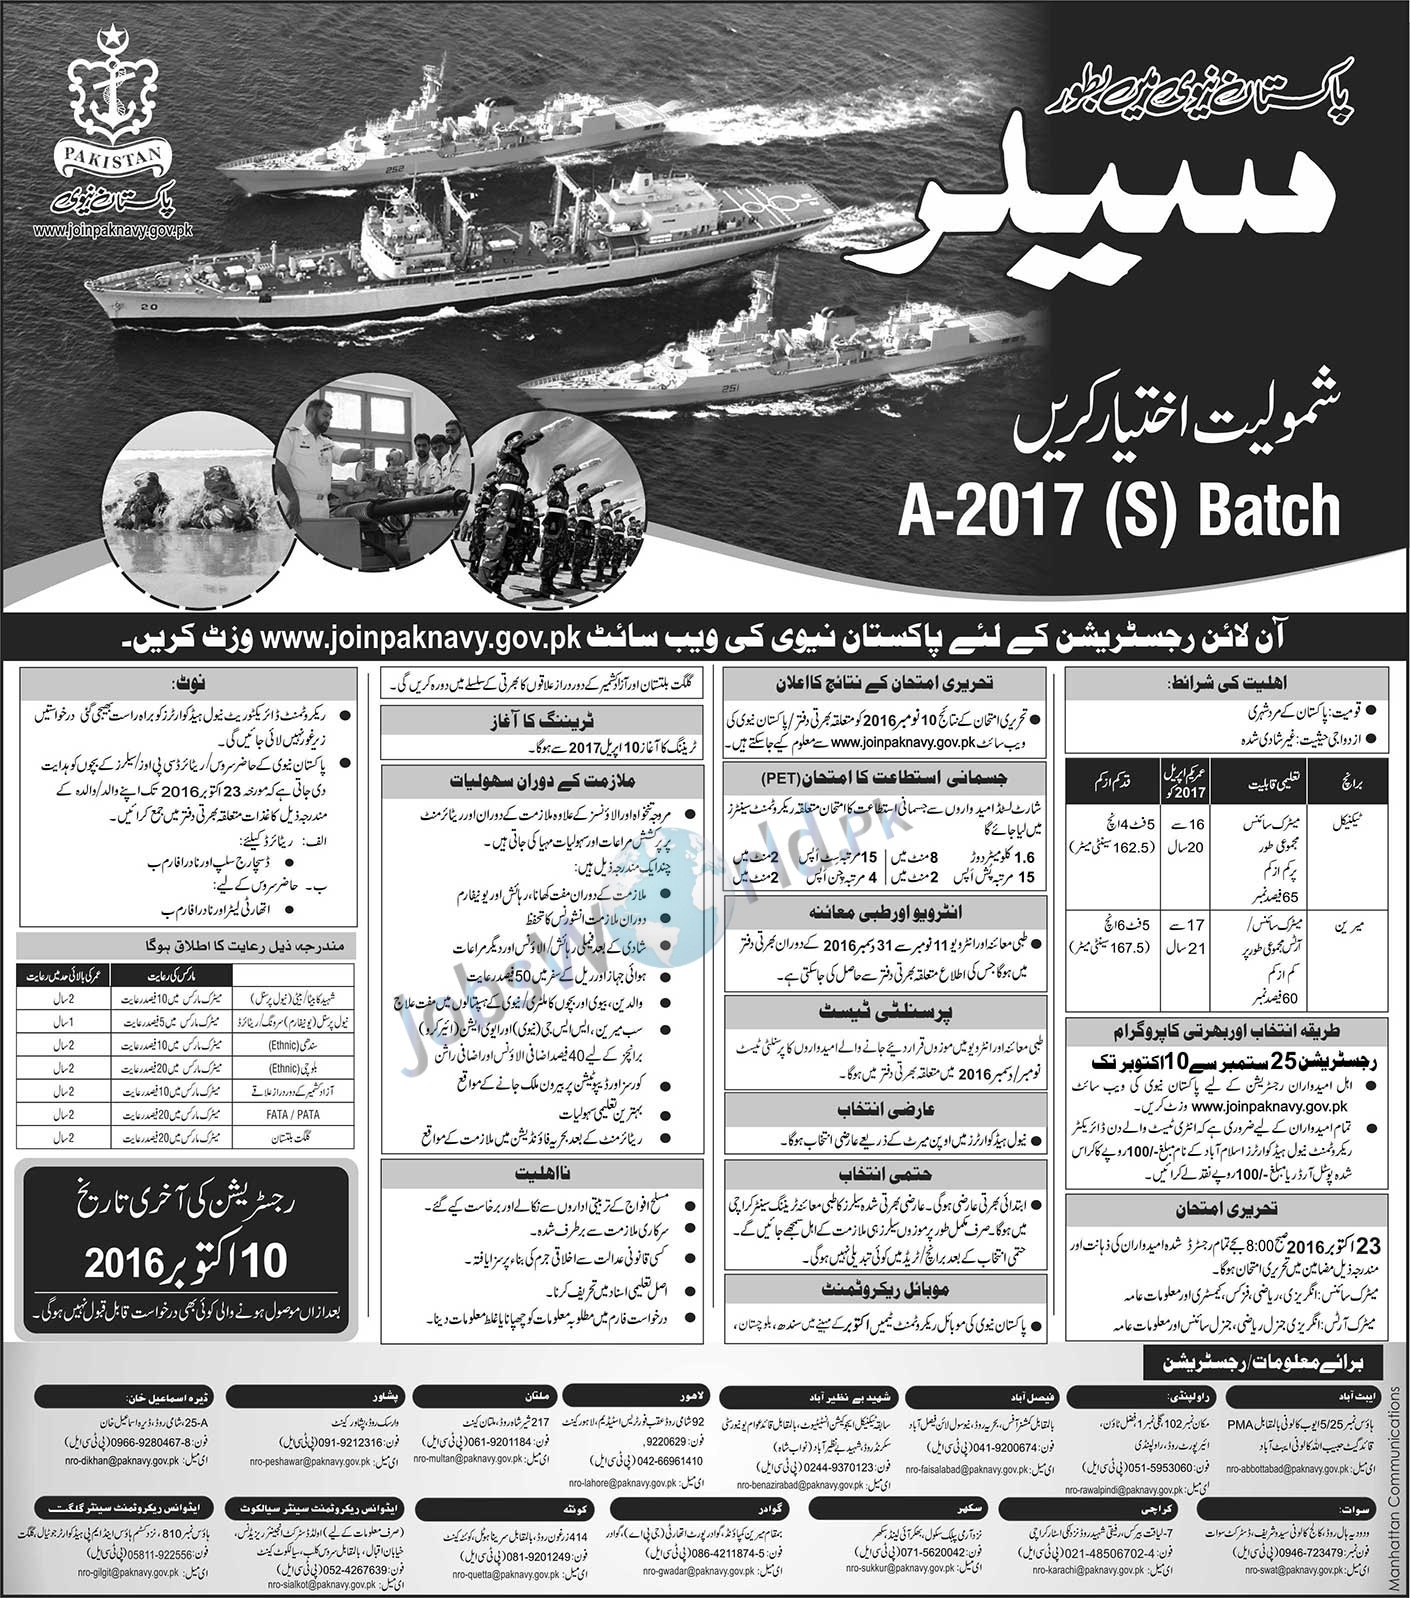 Pakistan-Navy-Sailor-Batch-A-2017.jpg